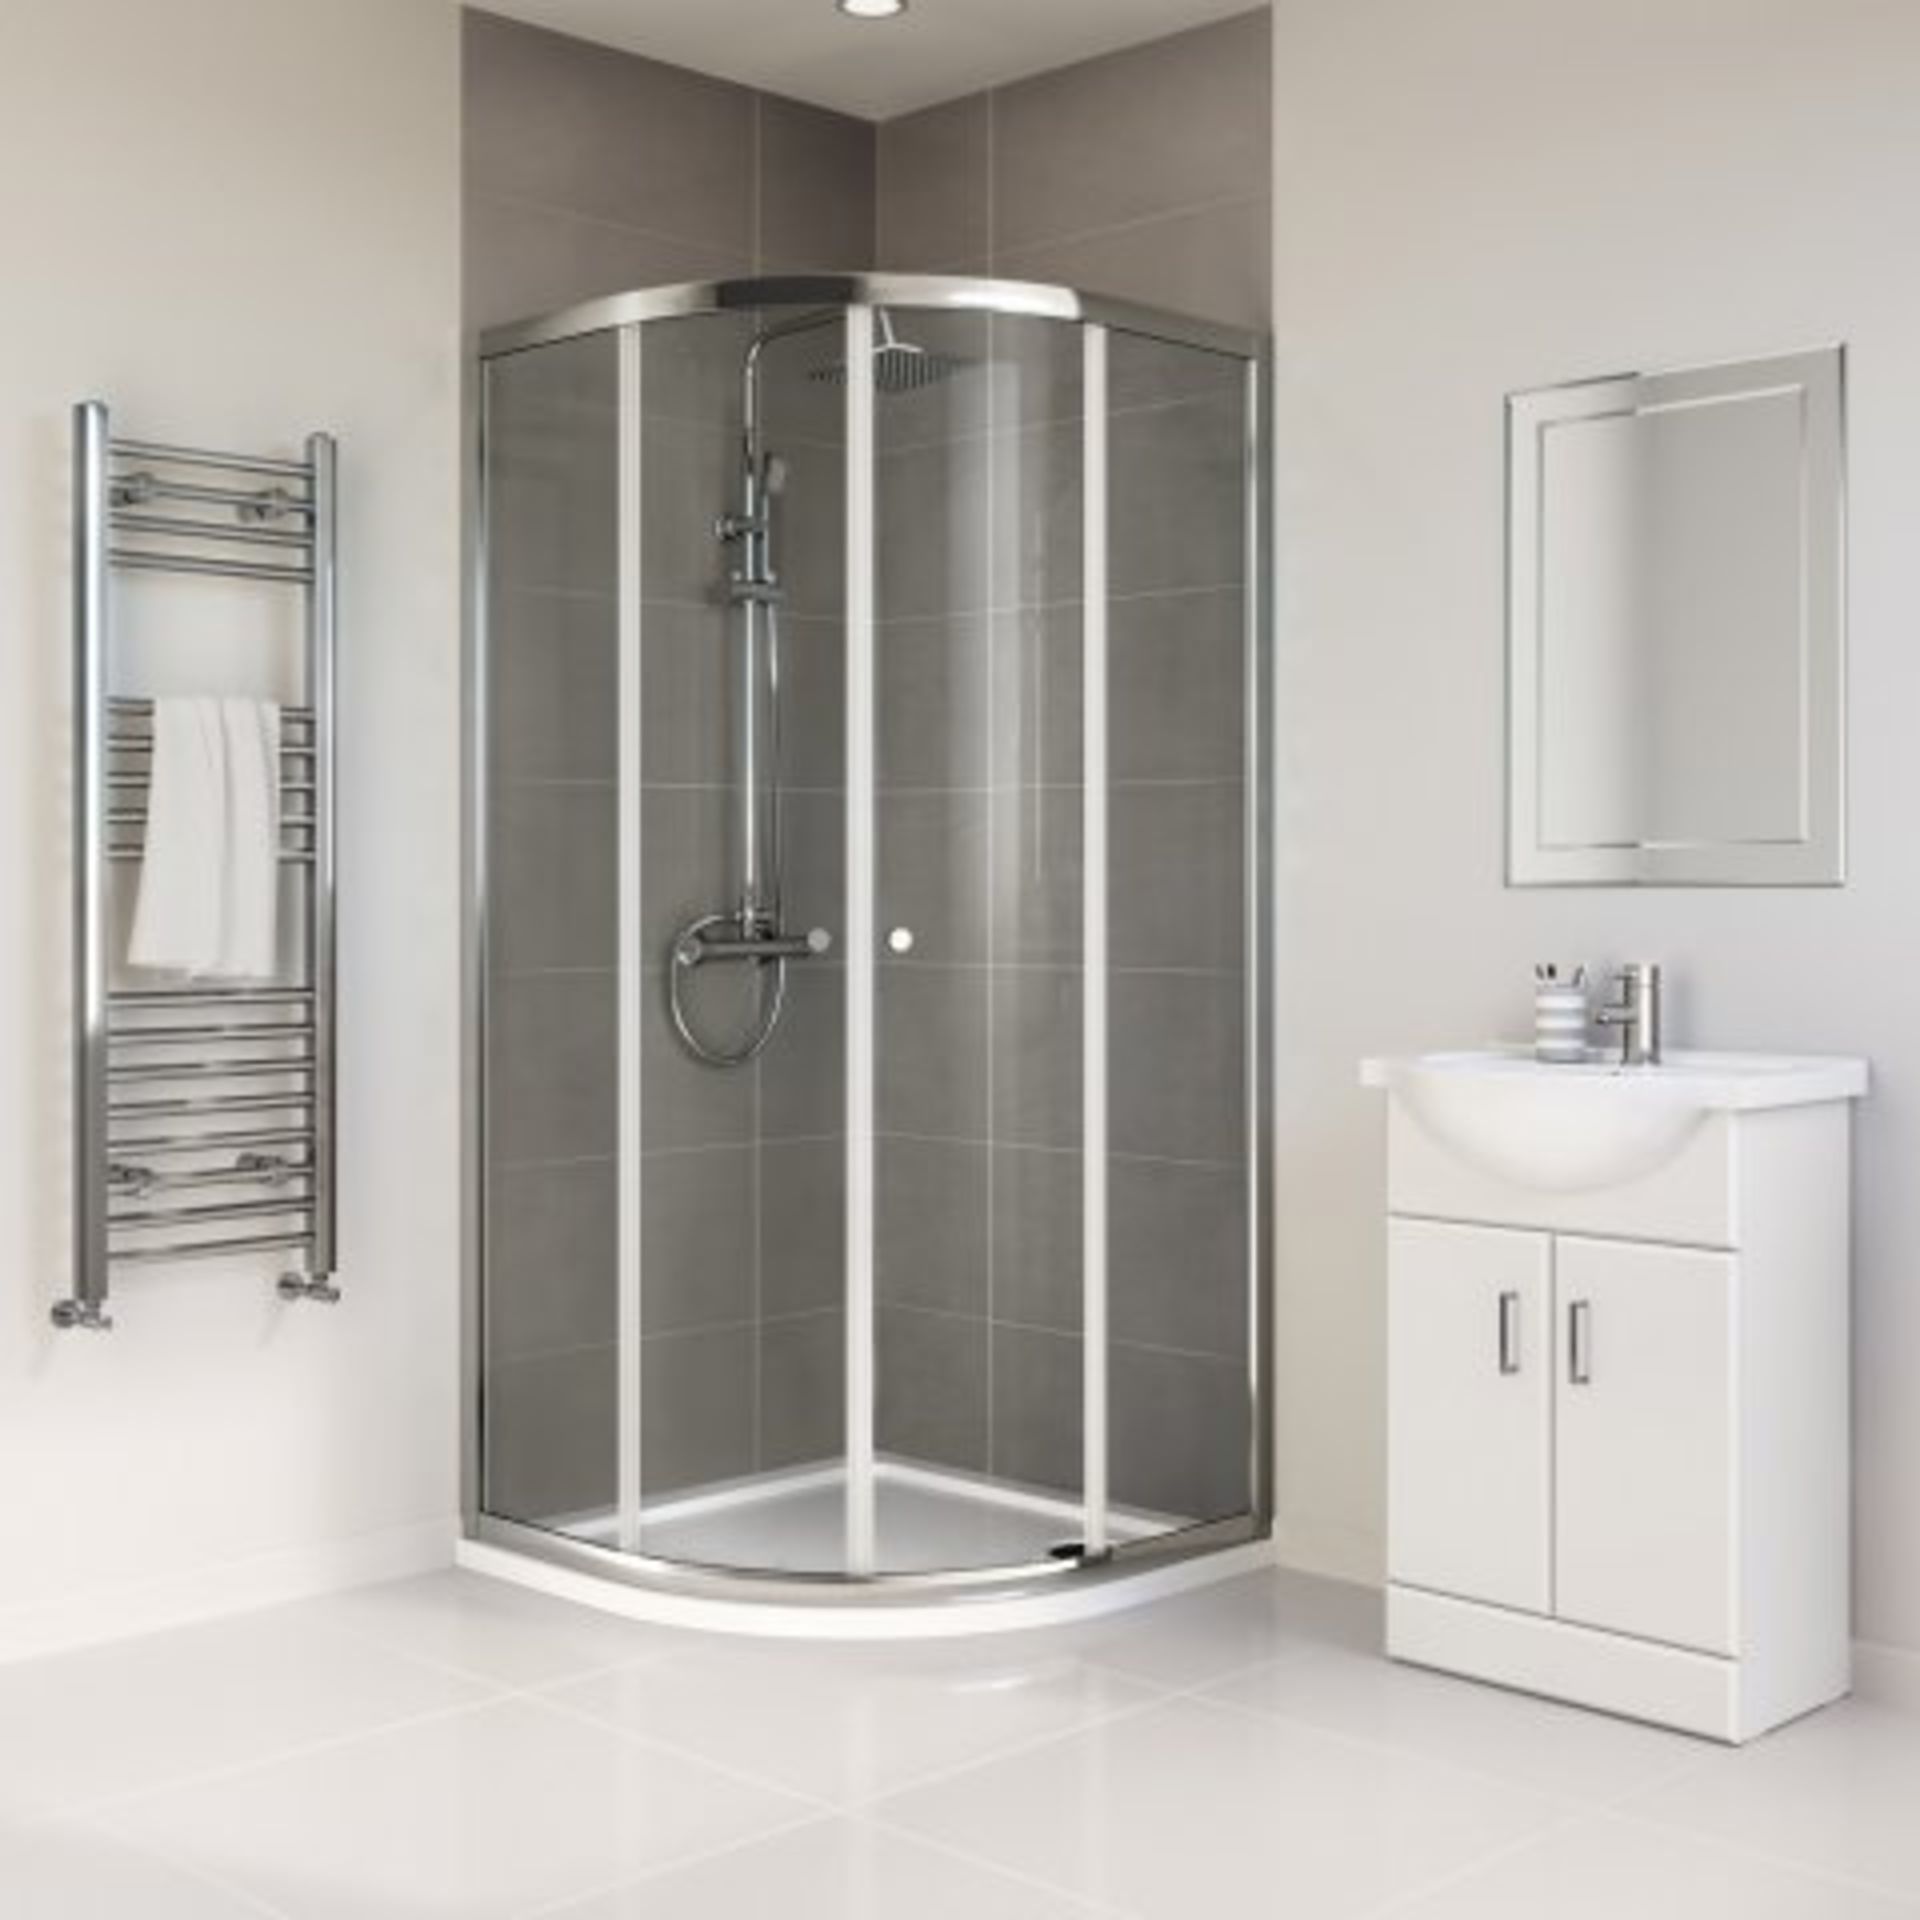 (P263) 900x900mm - Elements Quadrant Shower Enclosure. RRP £299.99. Budget Solution Our entry - Image 3 of 5